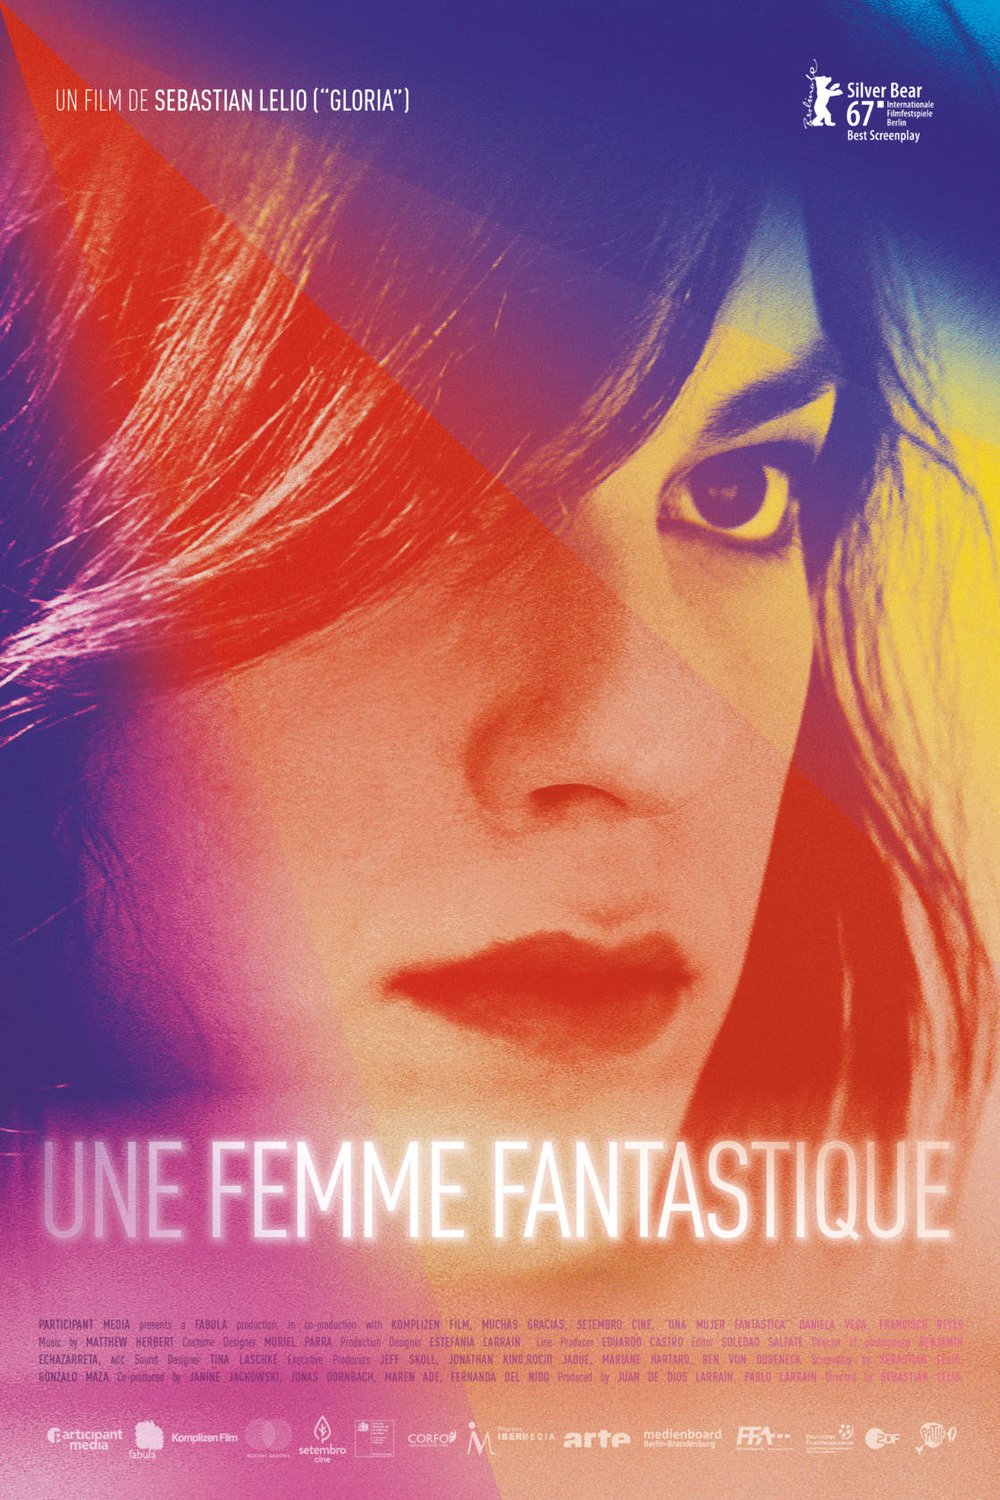 Poster of the movie Une Femme Fantastique